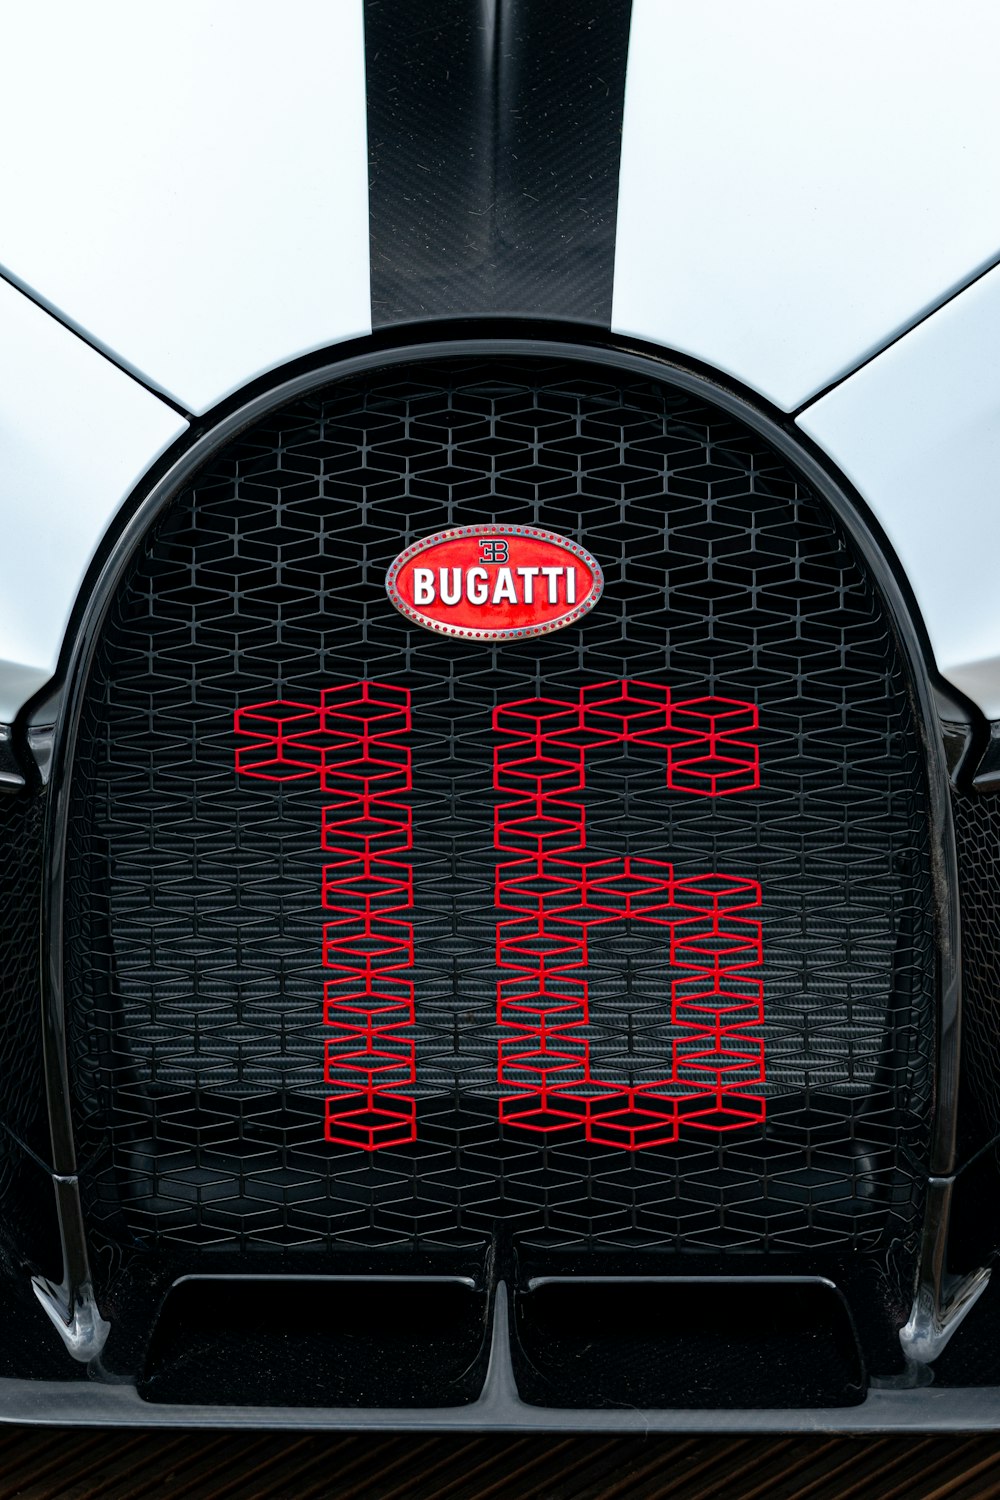 a bugatti logo on the back of a bugatti car